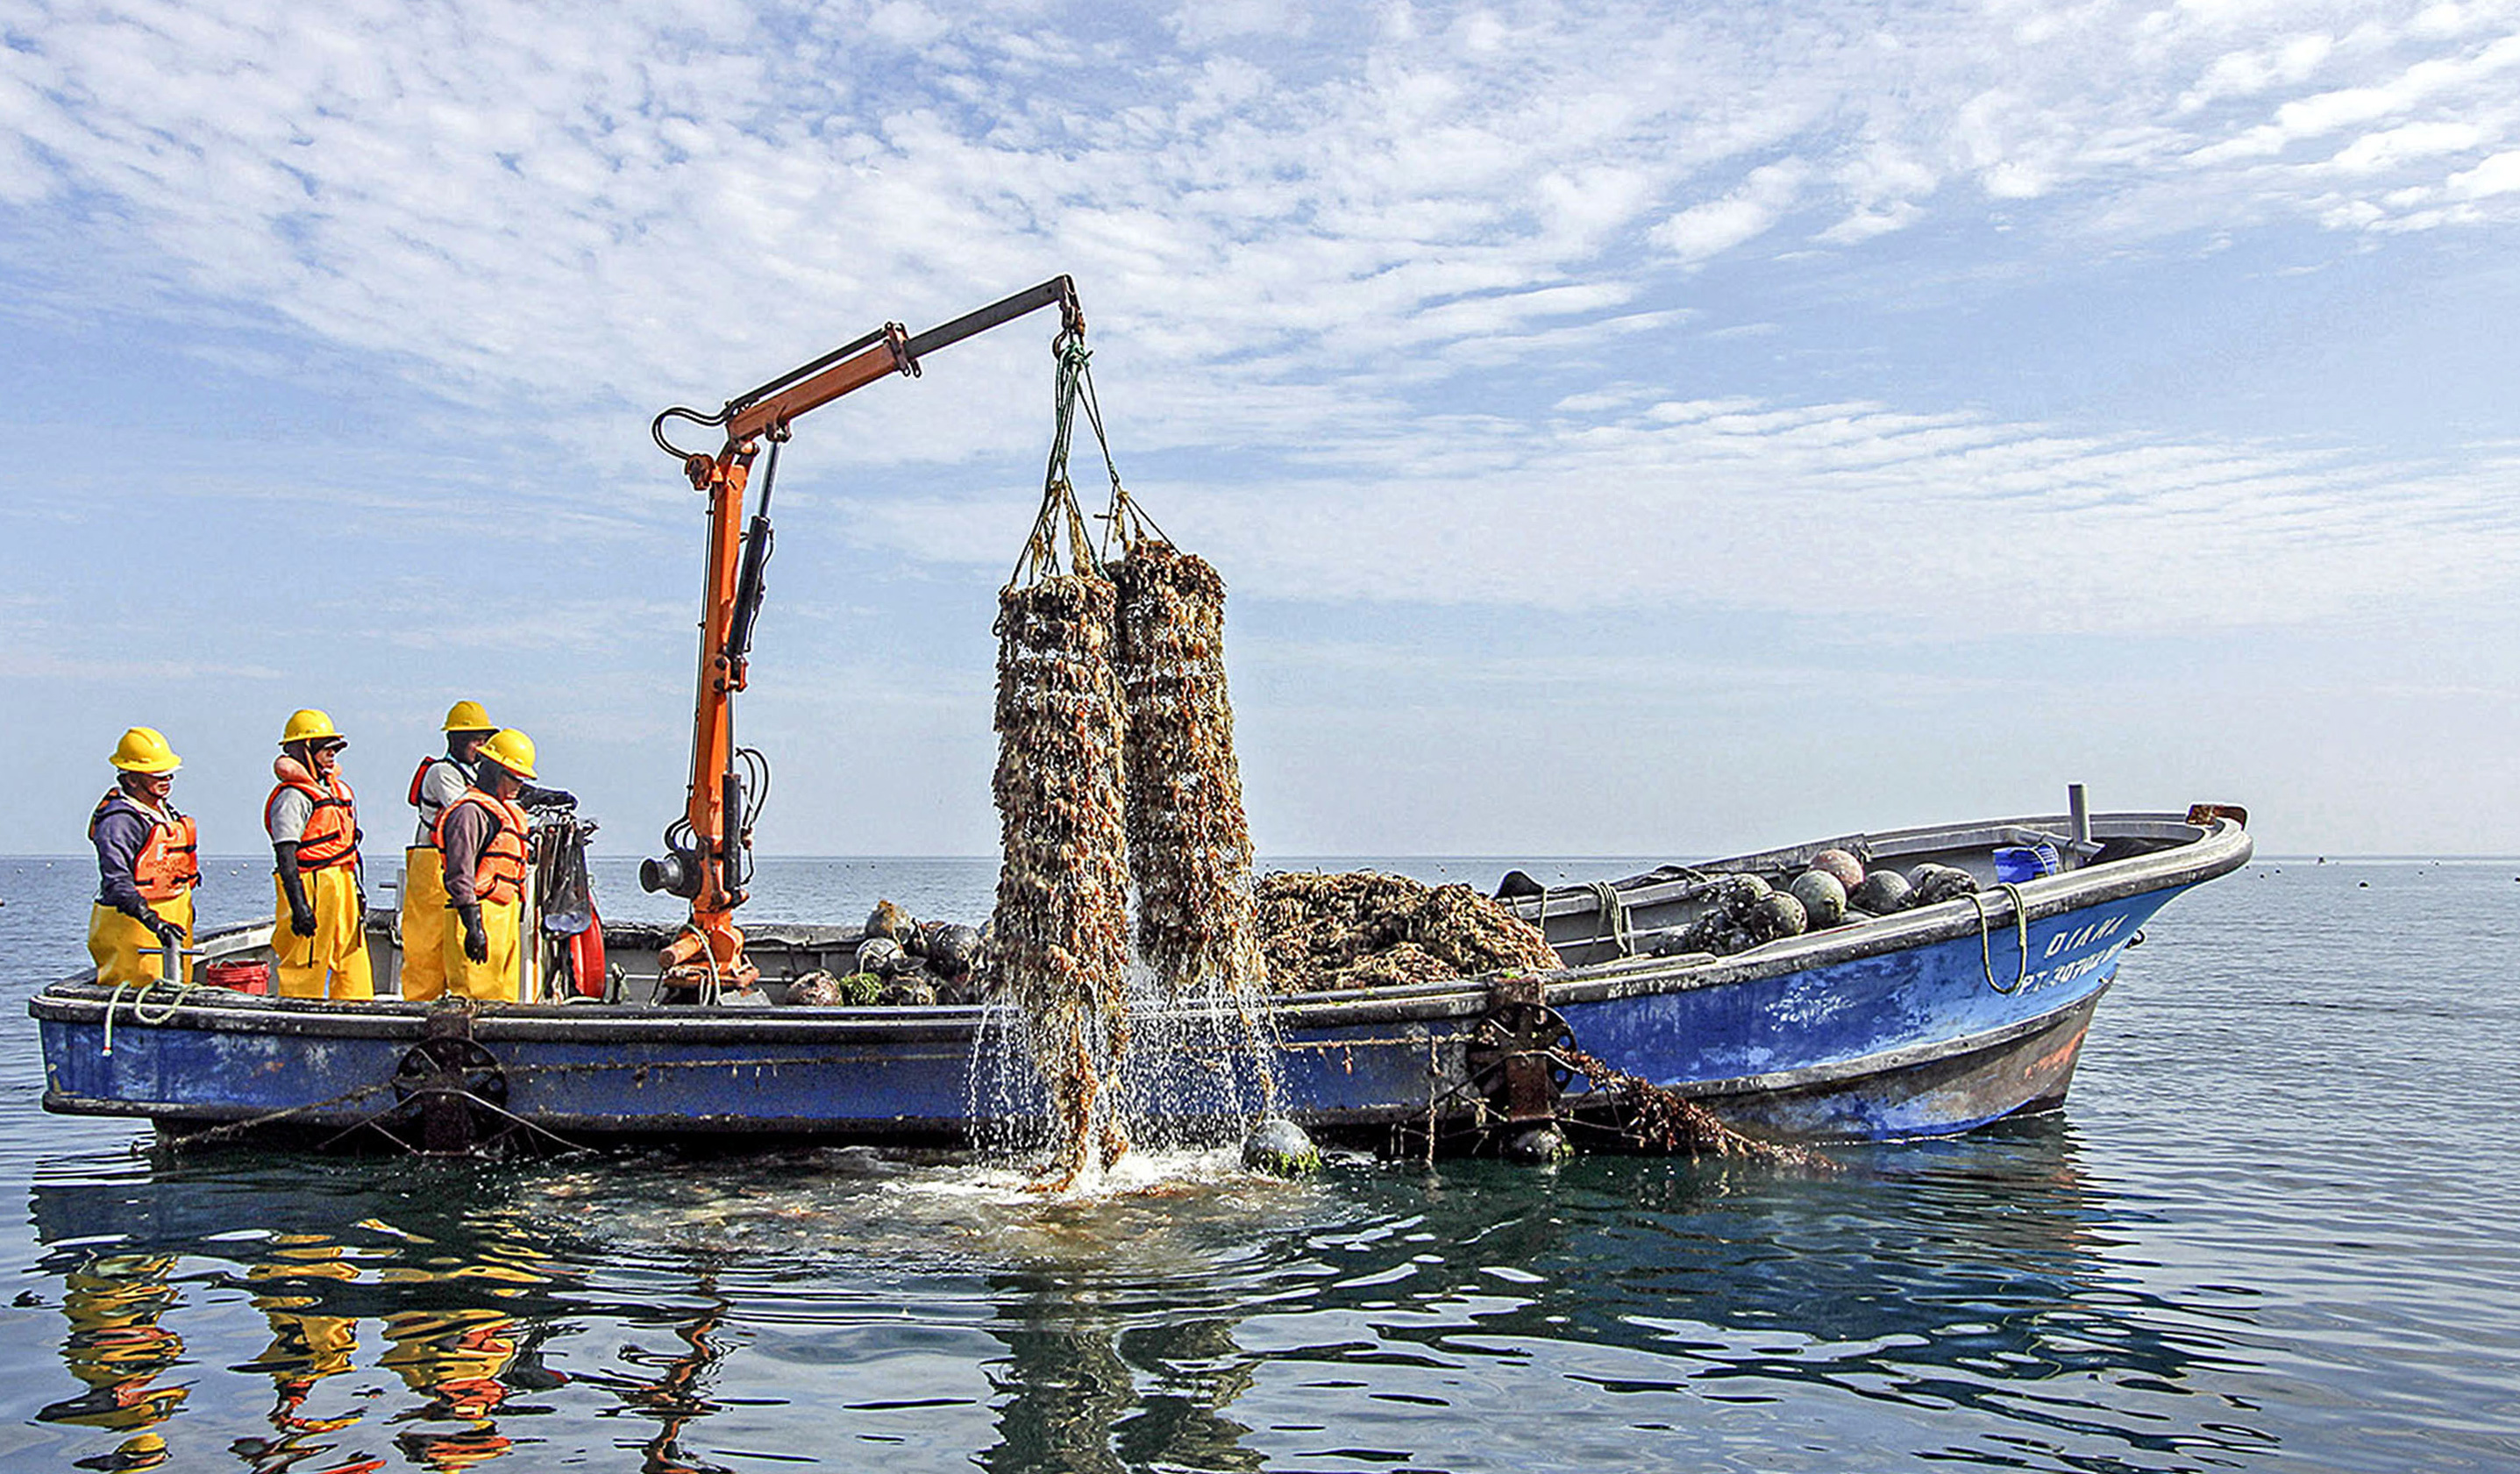 Conchas de abanico peruana llegarán a los Emiratos Árabes Unidos